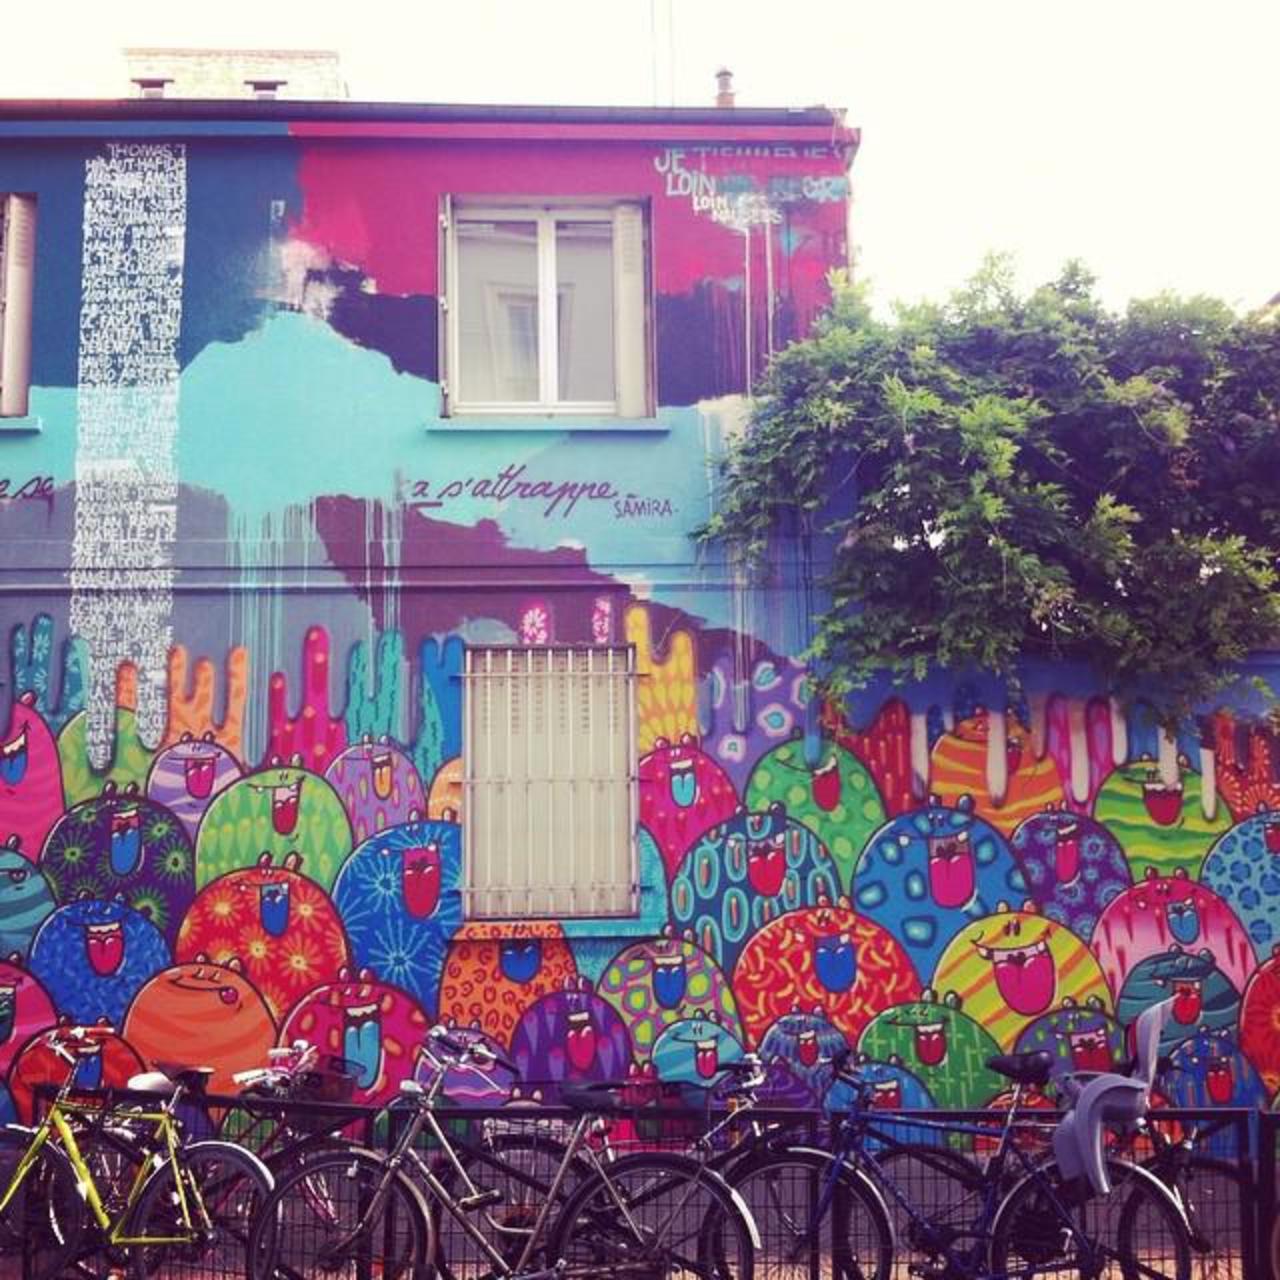 #Paris #graffiti photo by @valentine.frd http://ift.tt/1N6kIWZ #StreetArt http://t.co/NTOso0uvDF